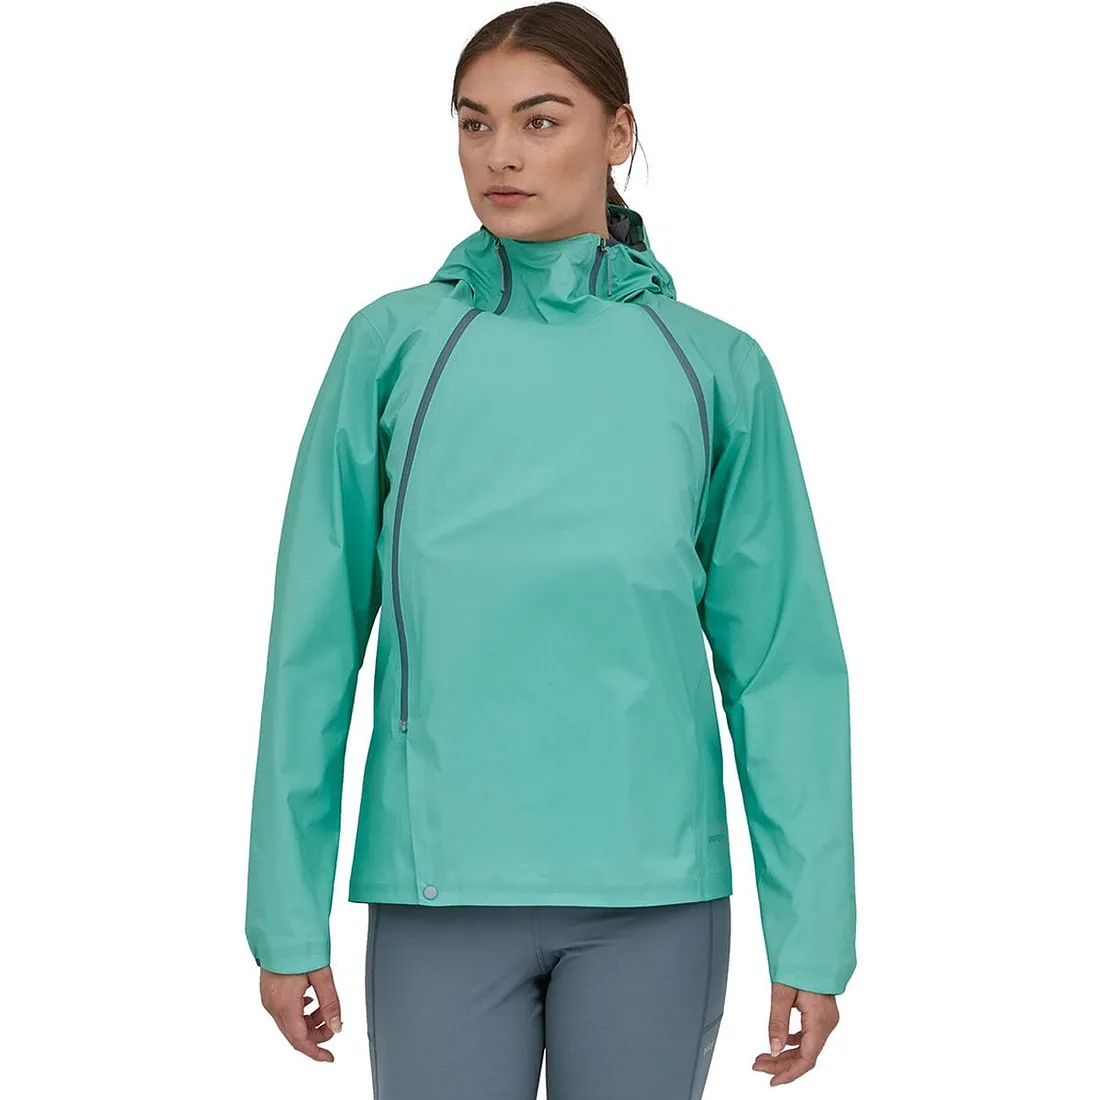 Patagonia Storm Racer Jacket Women's Rain Jacket